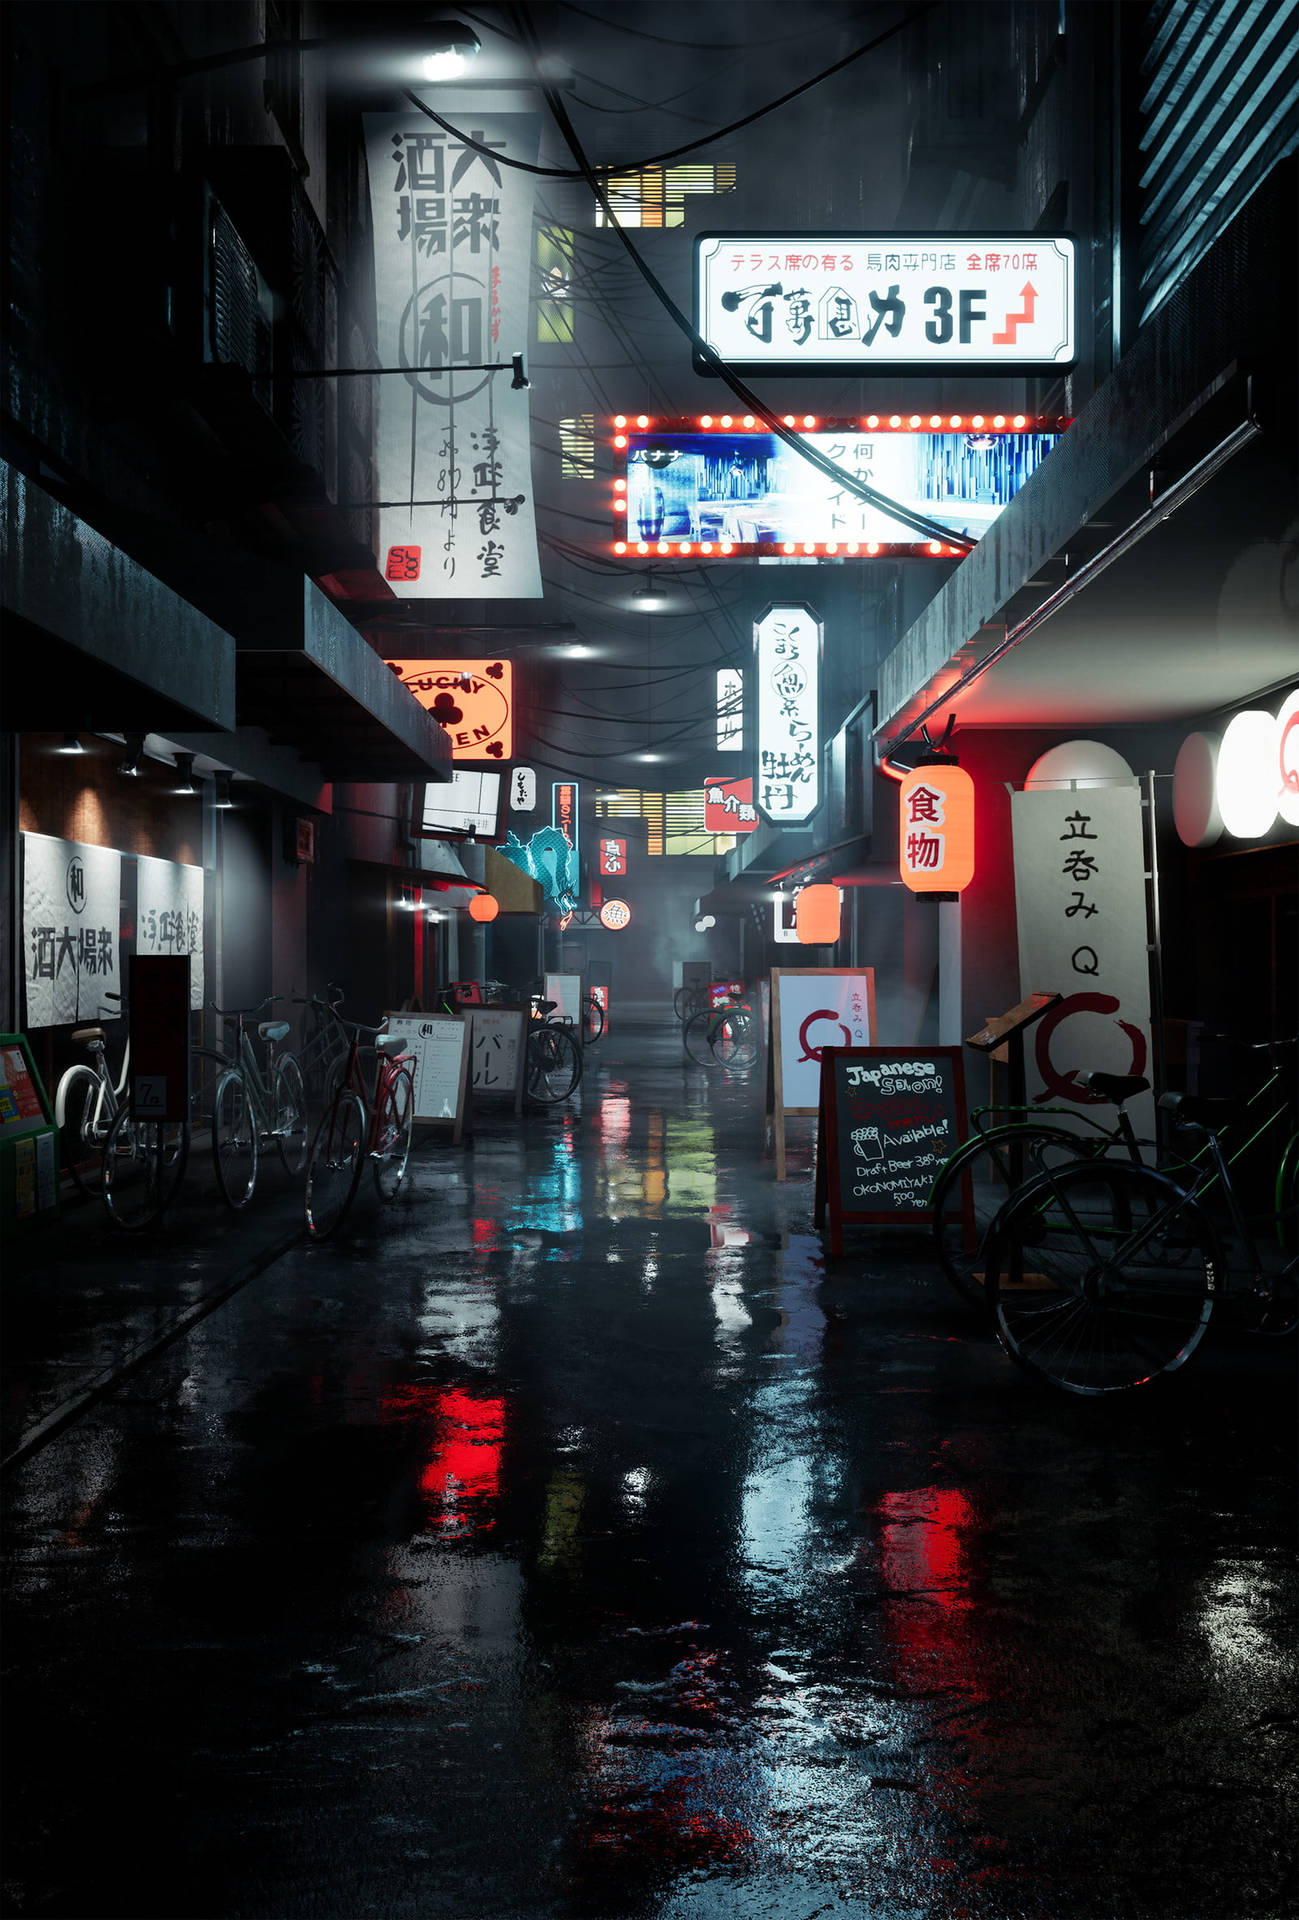 Rainy Japan 4k At Night